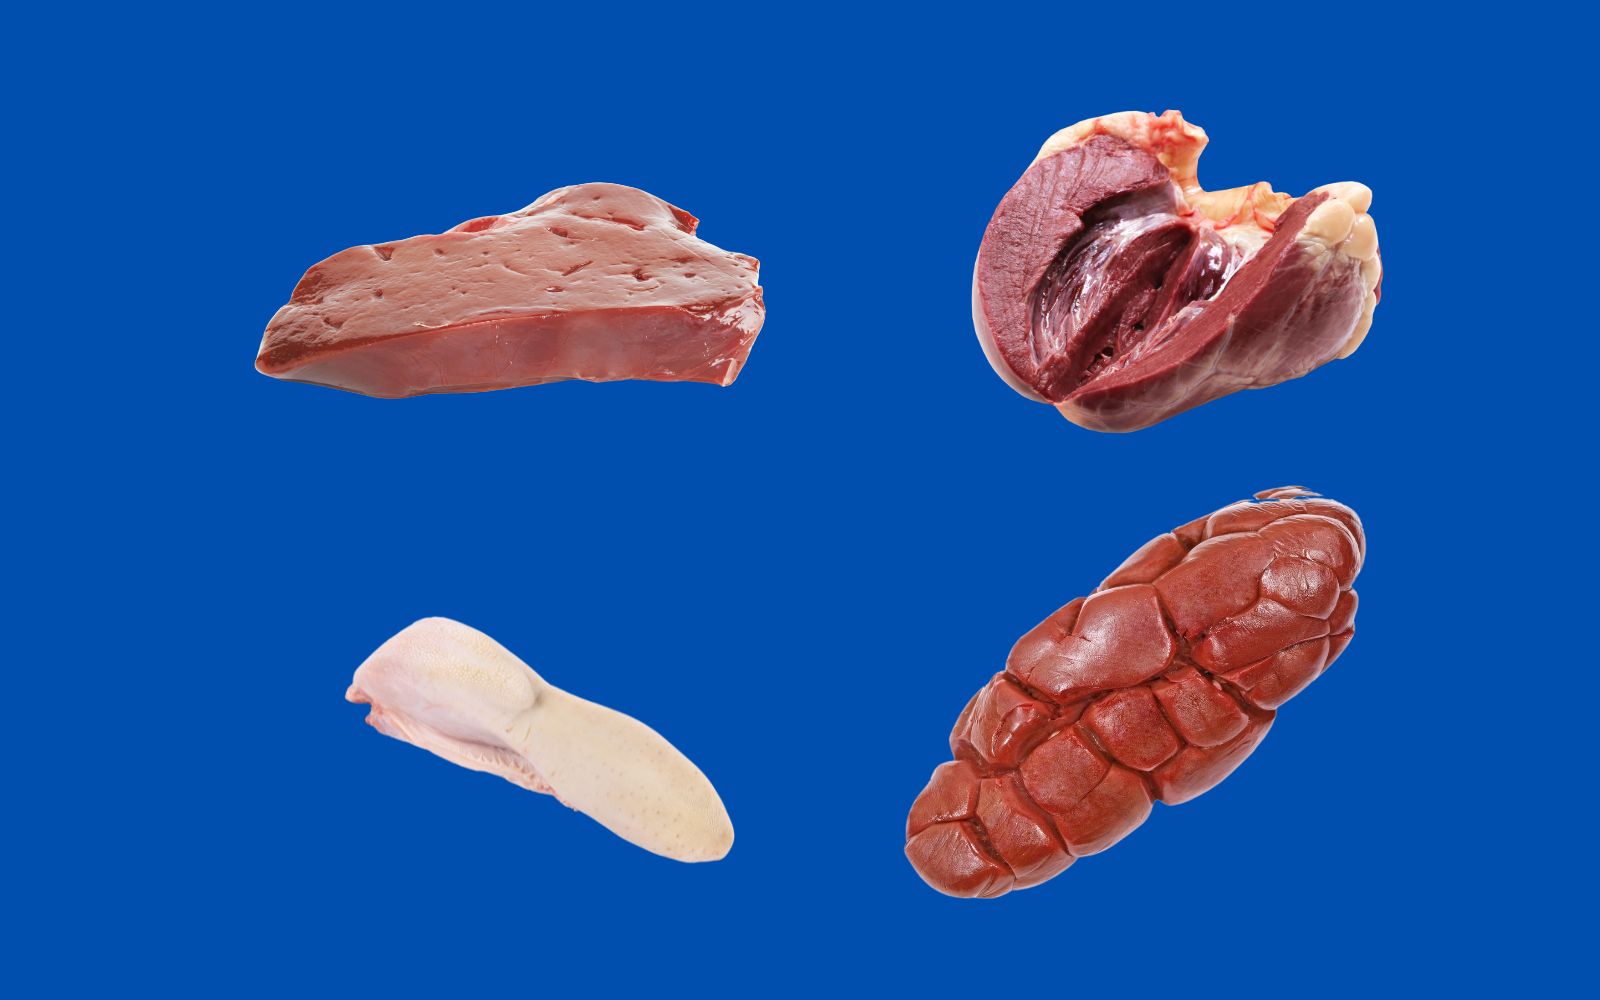 Examples of organ meats